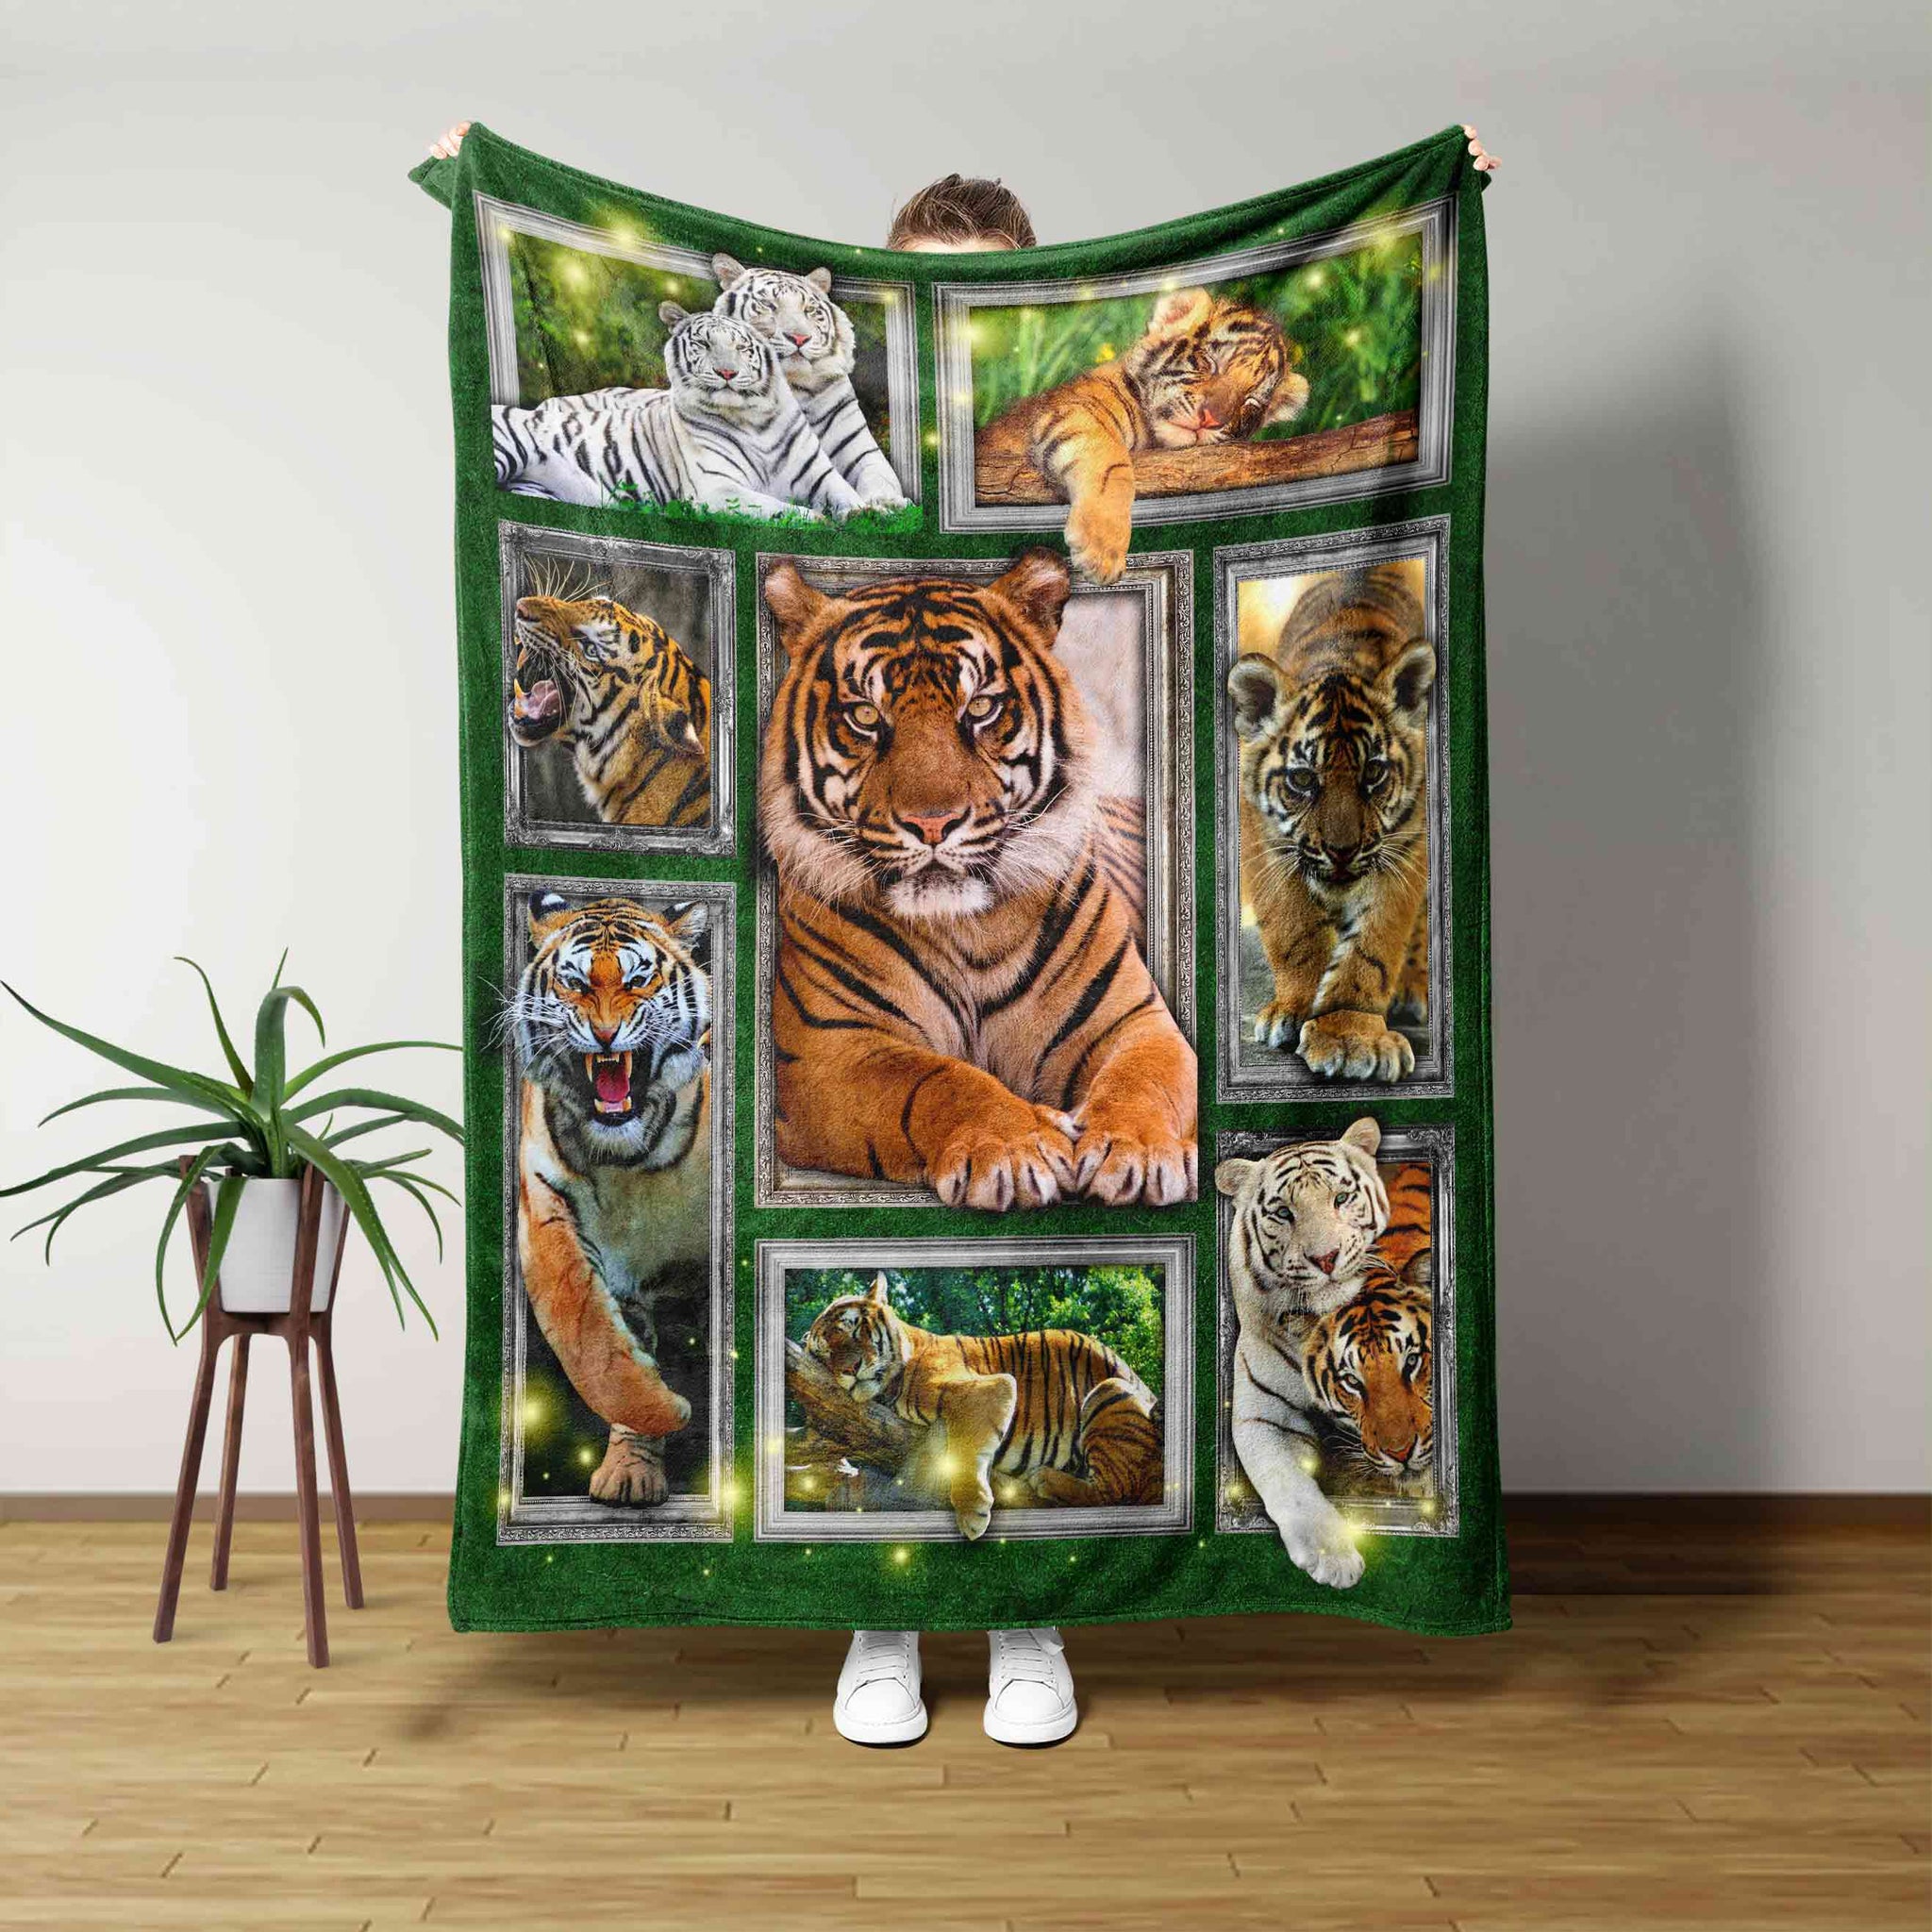 Tiger Blanket, Mexican Tiger Blanket, Family Blanket, Gift Blanket, Blanket For Gift